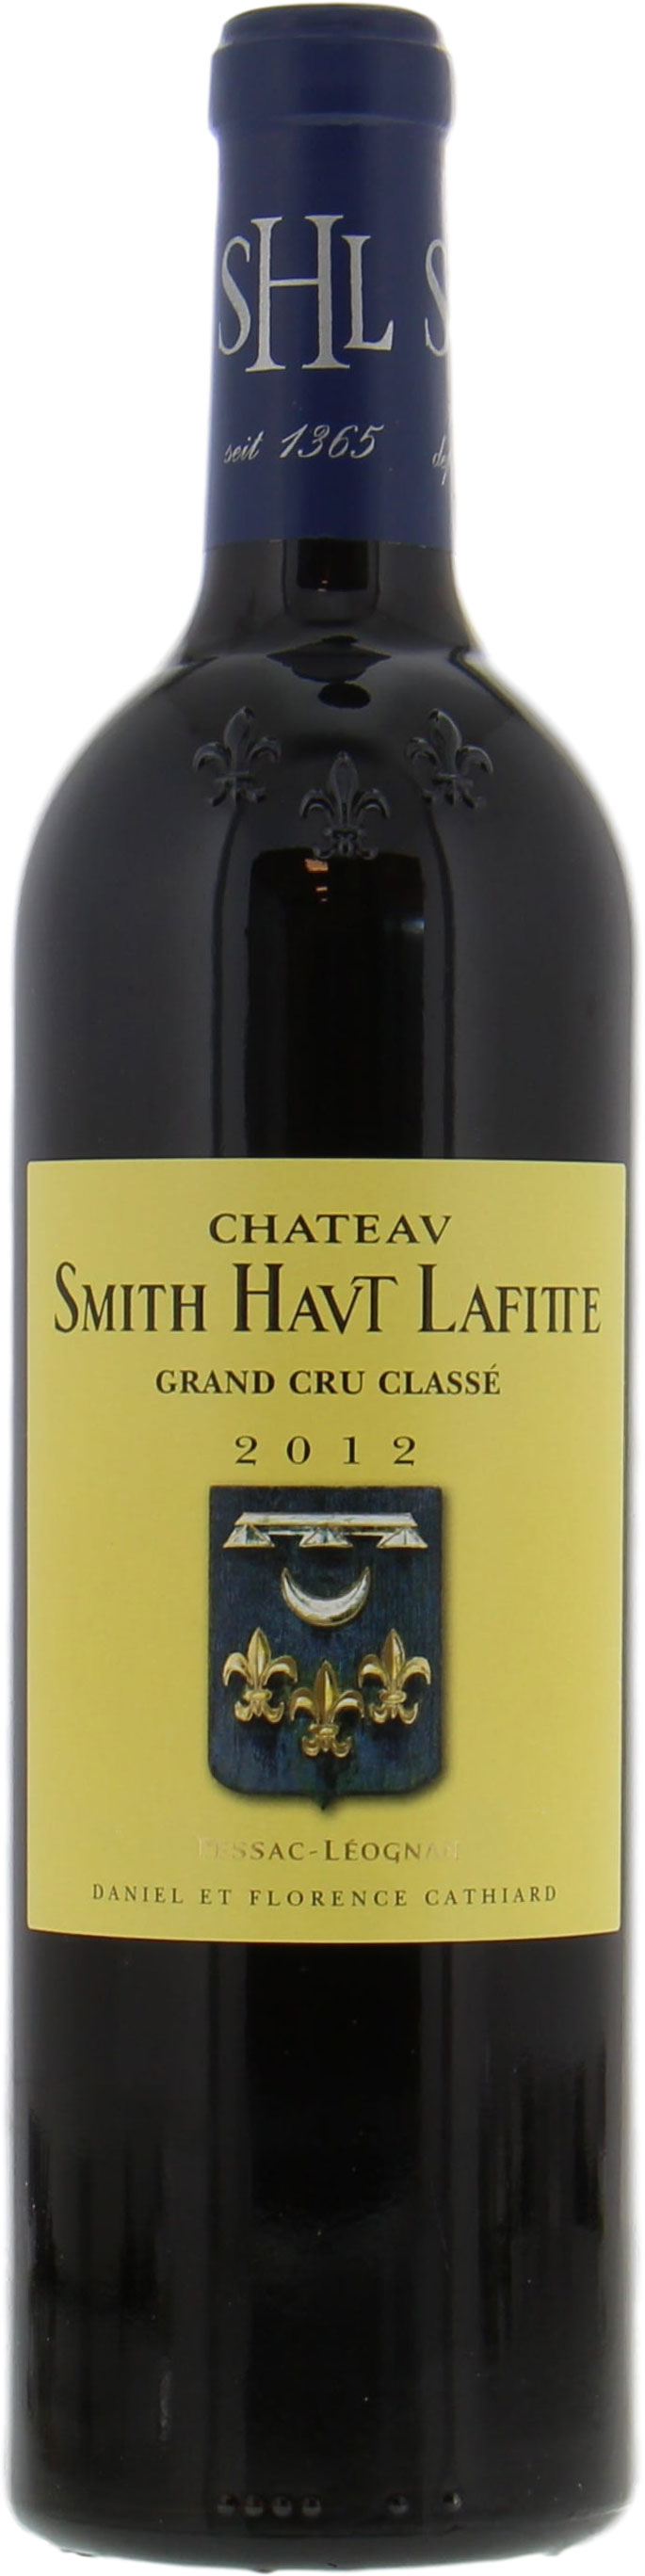 Chateau Smith-Haut-Lafitte Rouge - Chateau Smith-Haut-Lafitte Rouge 2012 From Original Wooden Case